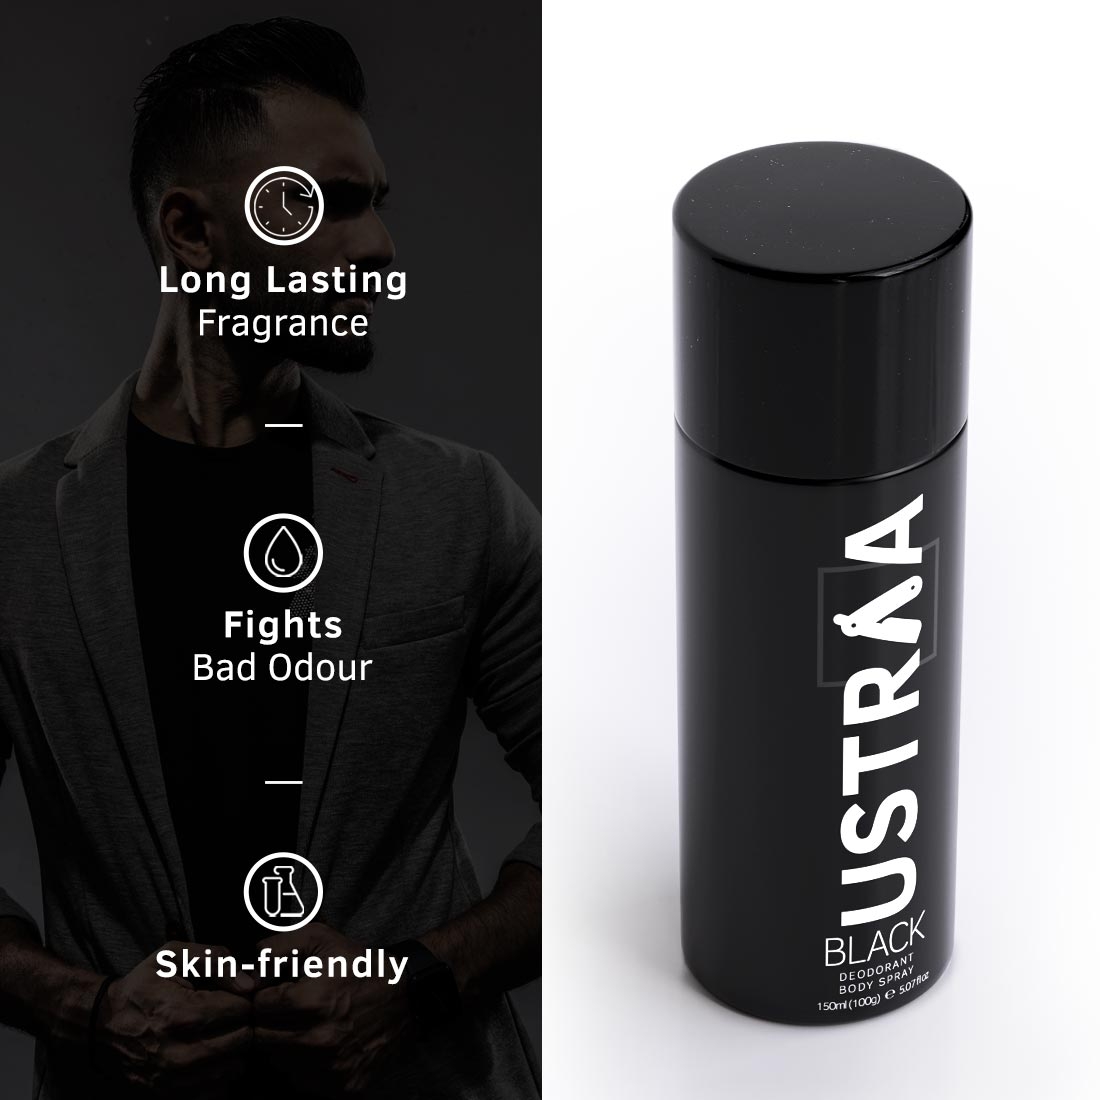 Ustraa Hair Vitalizer Shampoo - 250ml & Black Deodorant - Body Spray - 150ml